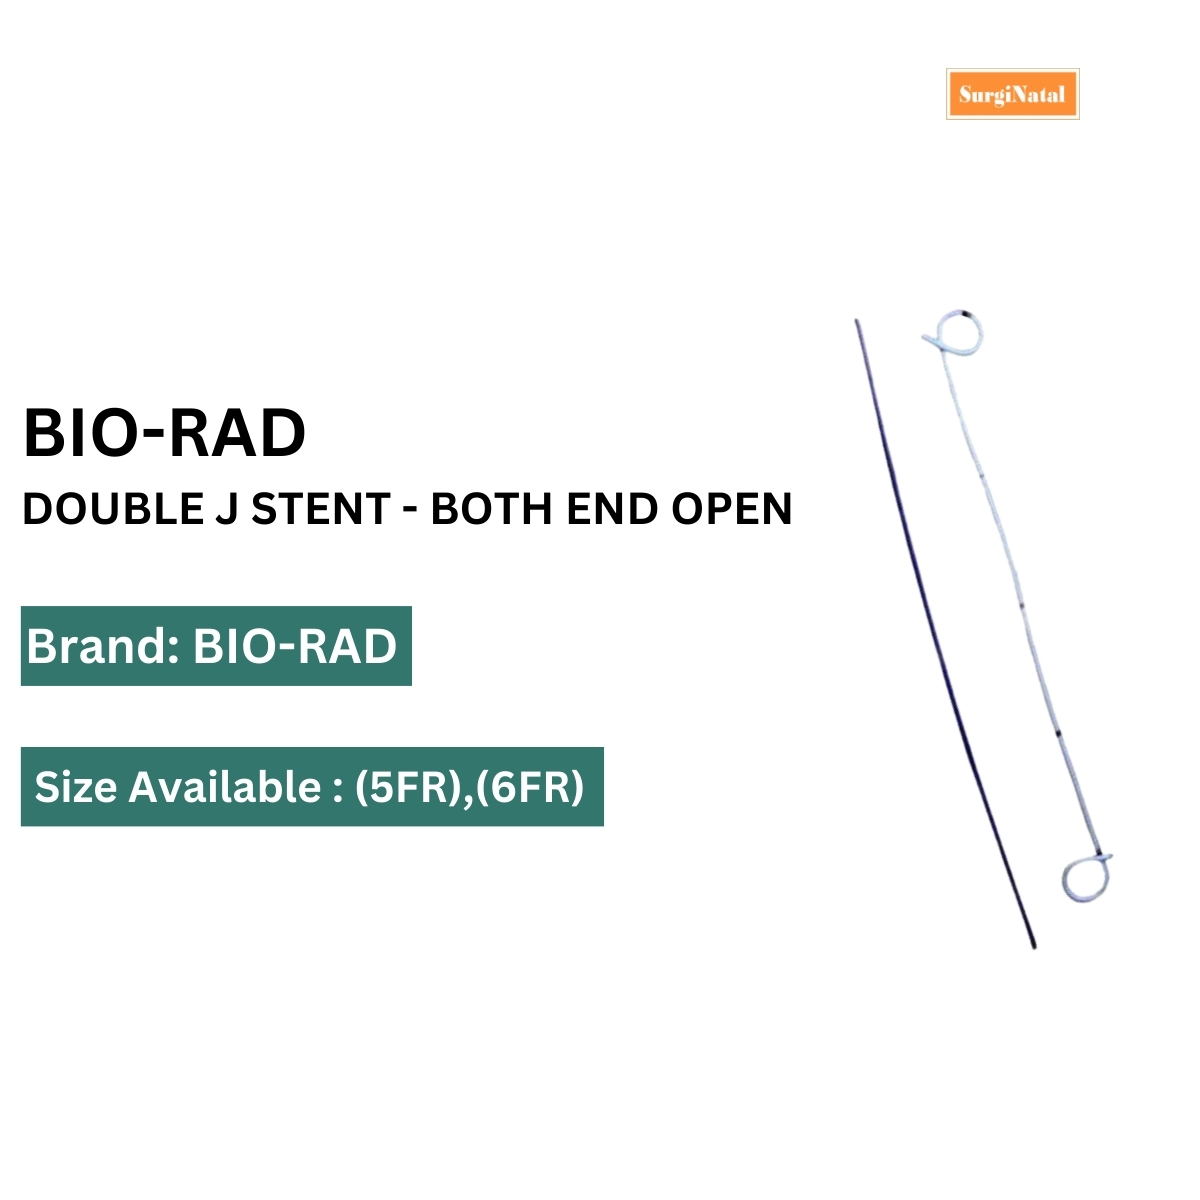 bio-rad double j stent - both end open